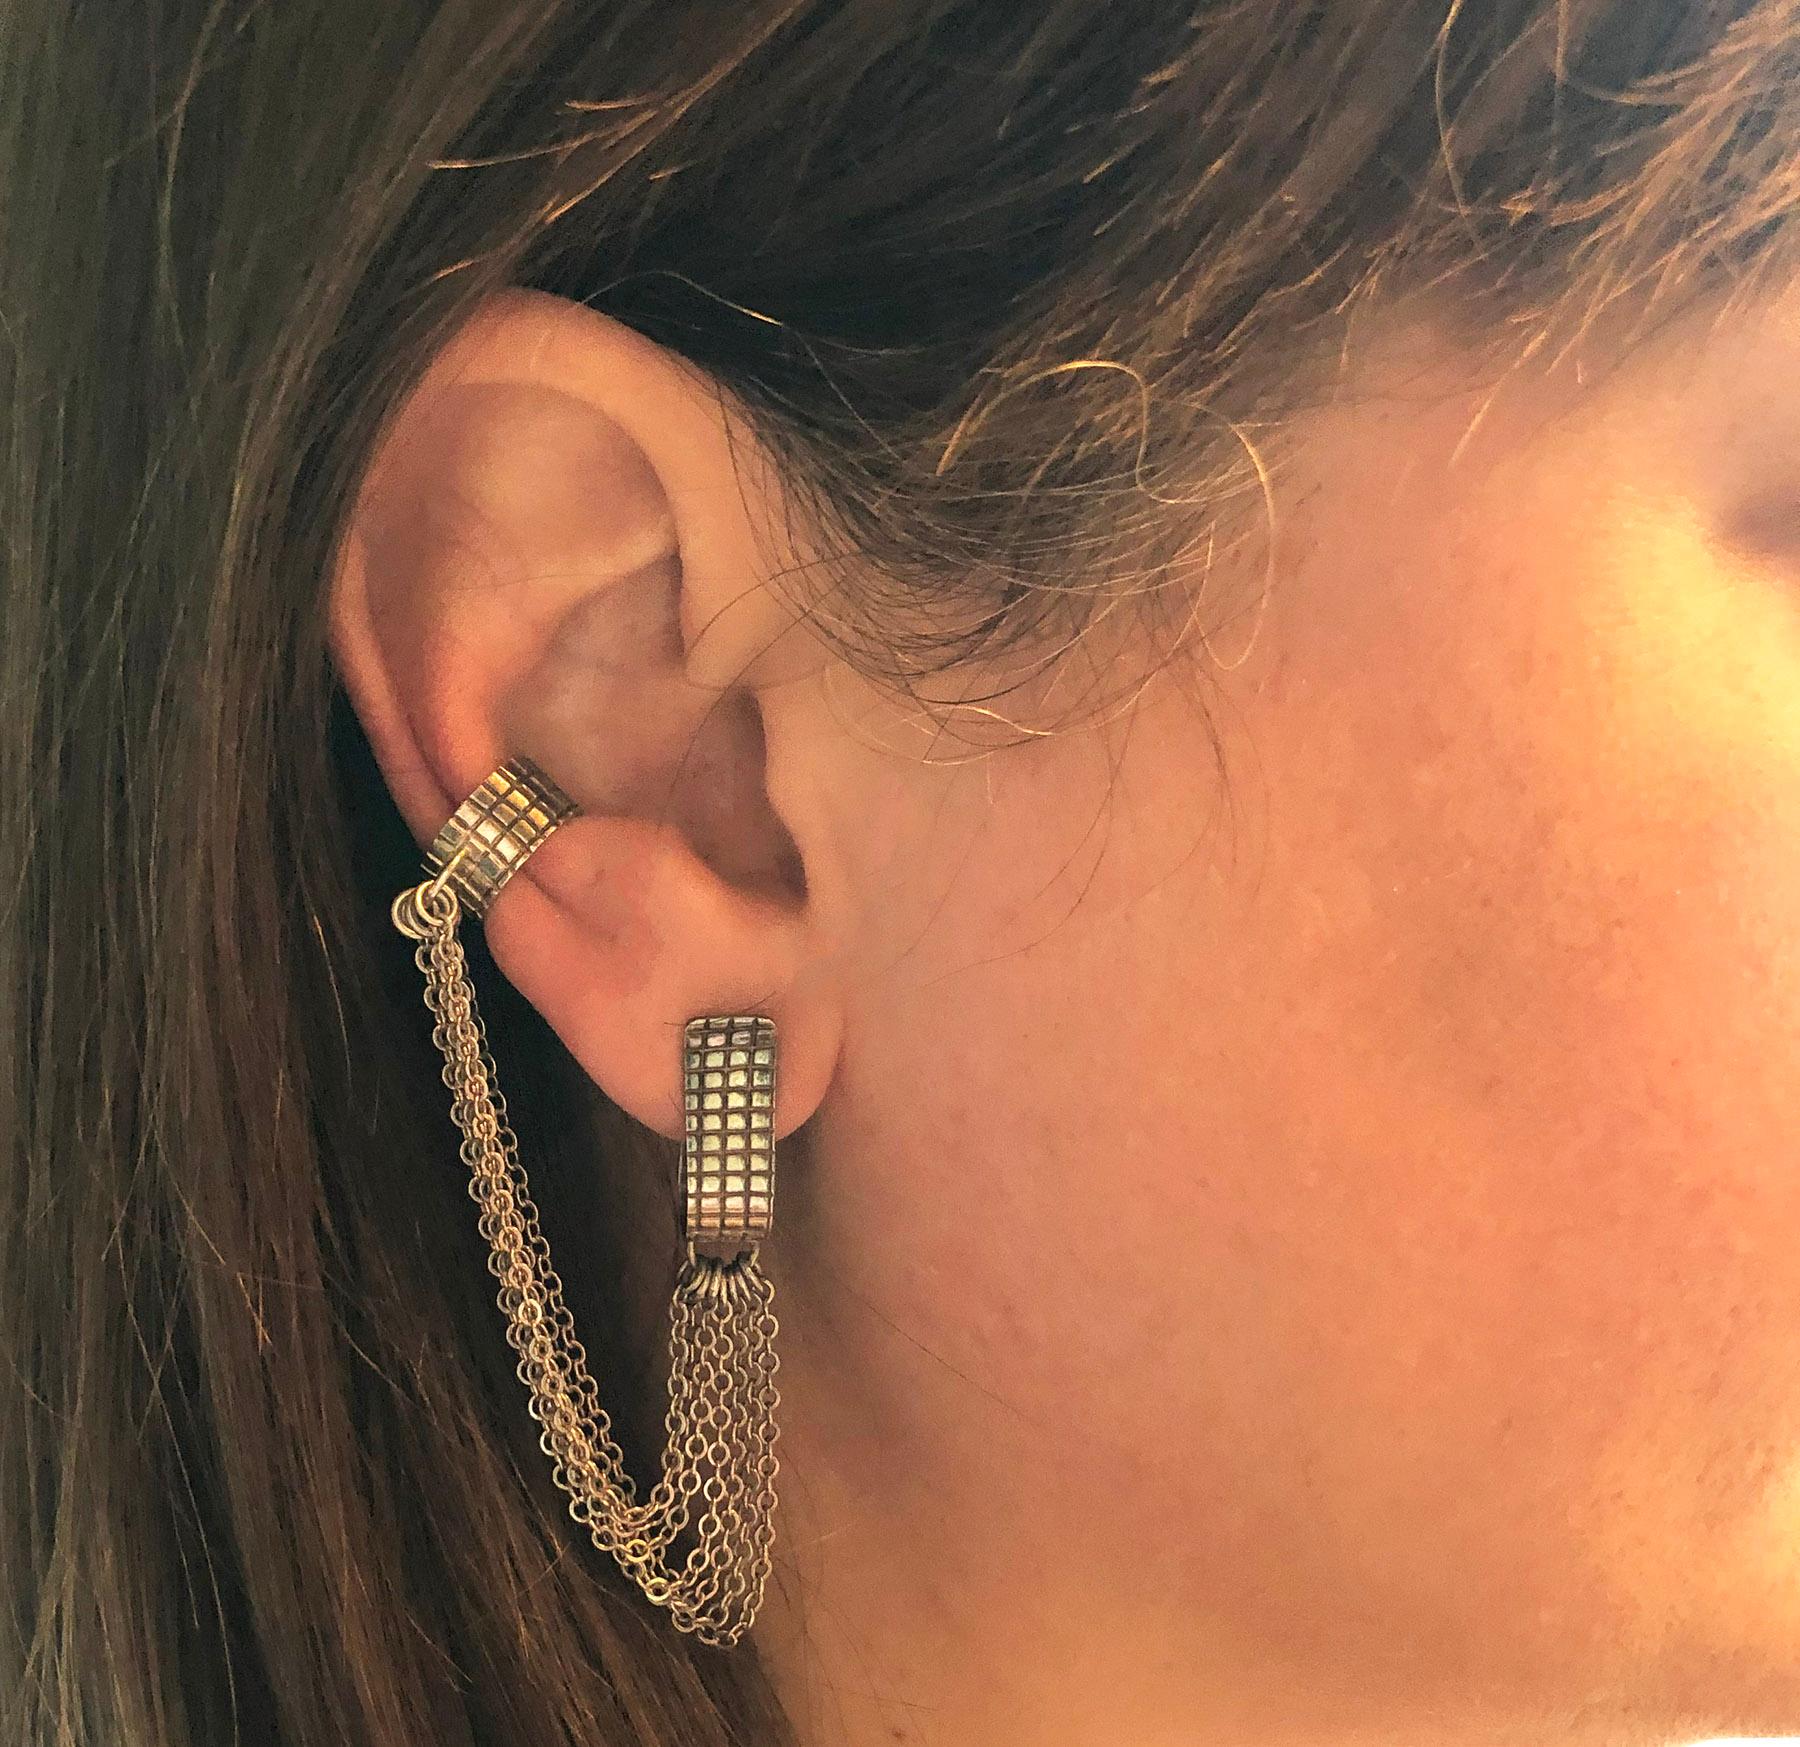 Sterling silver chain cuff pair of earrings by jeweler Mary Ann Scherr of North Carolina.  Pierced earrings measure 4.25